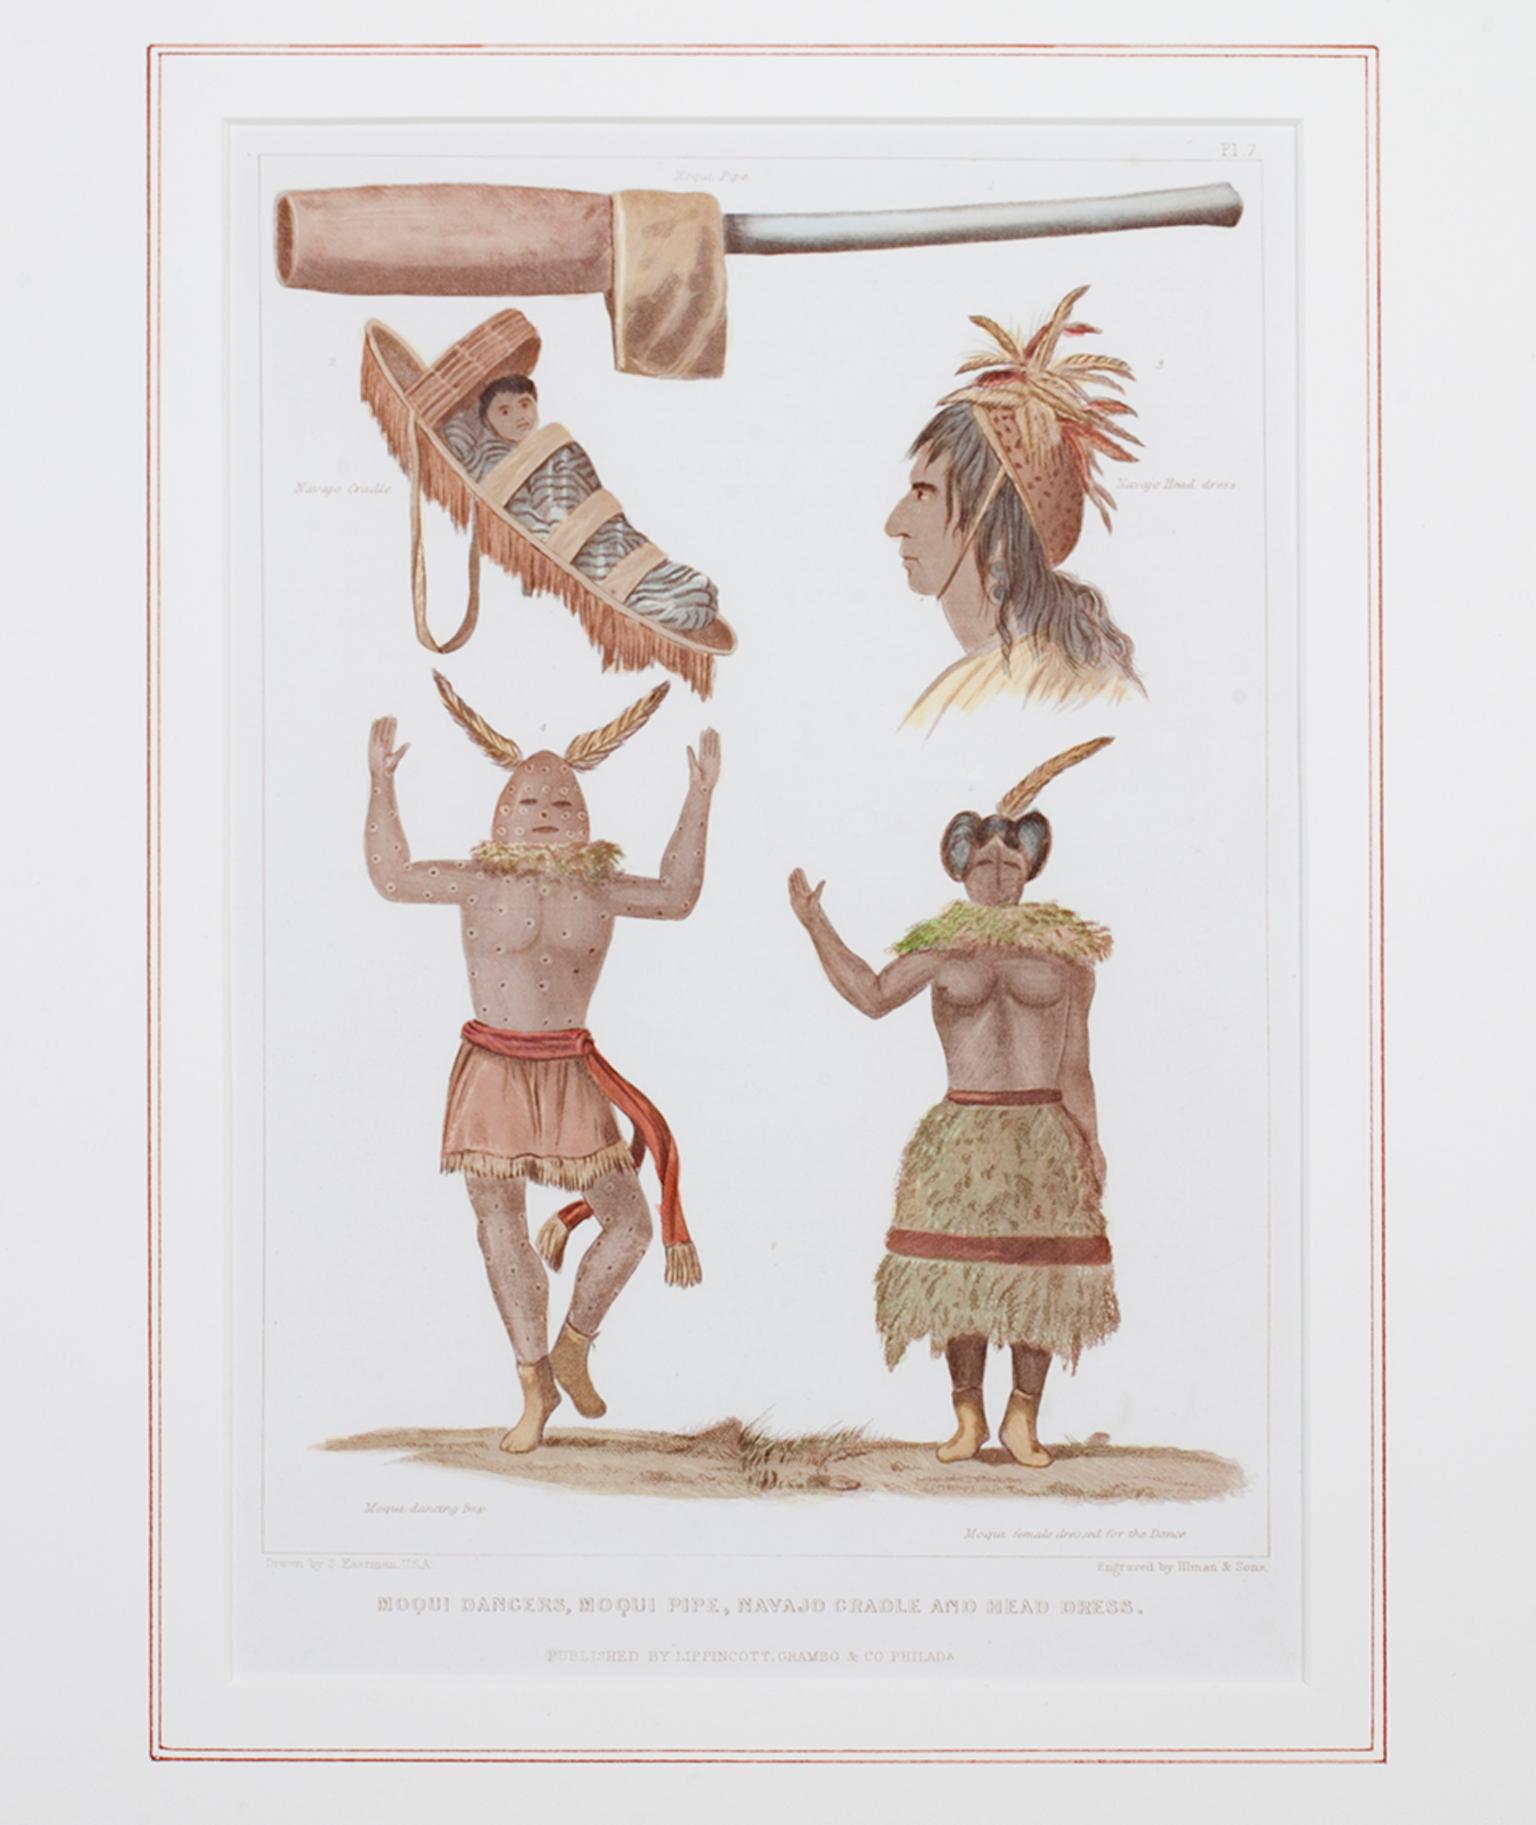 "Moqui Dancers, Moqui Pipe, Navajo Cradle & Headdress" Engraving by Seth Eastman